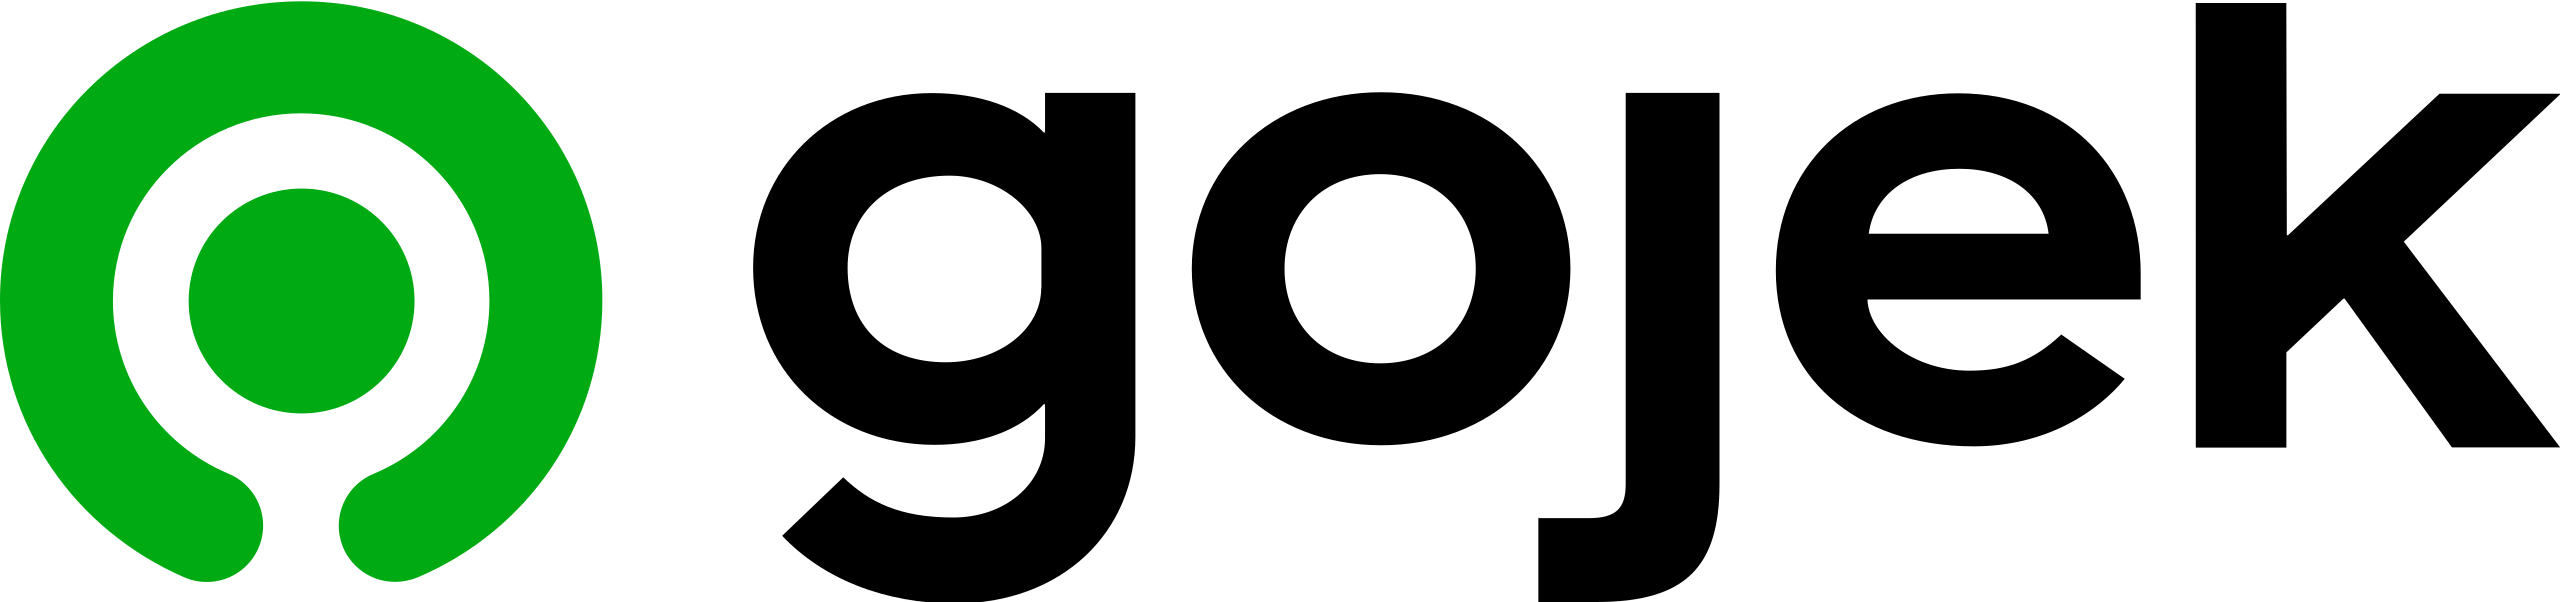 Gojek Brand Logo